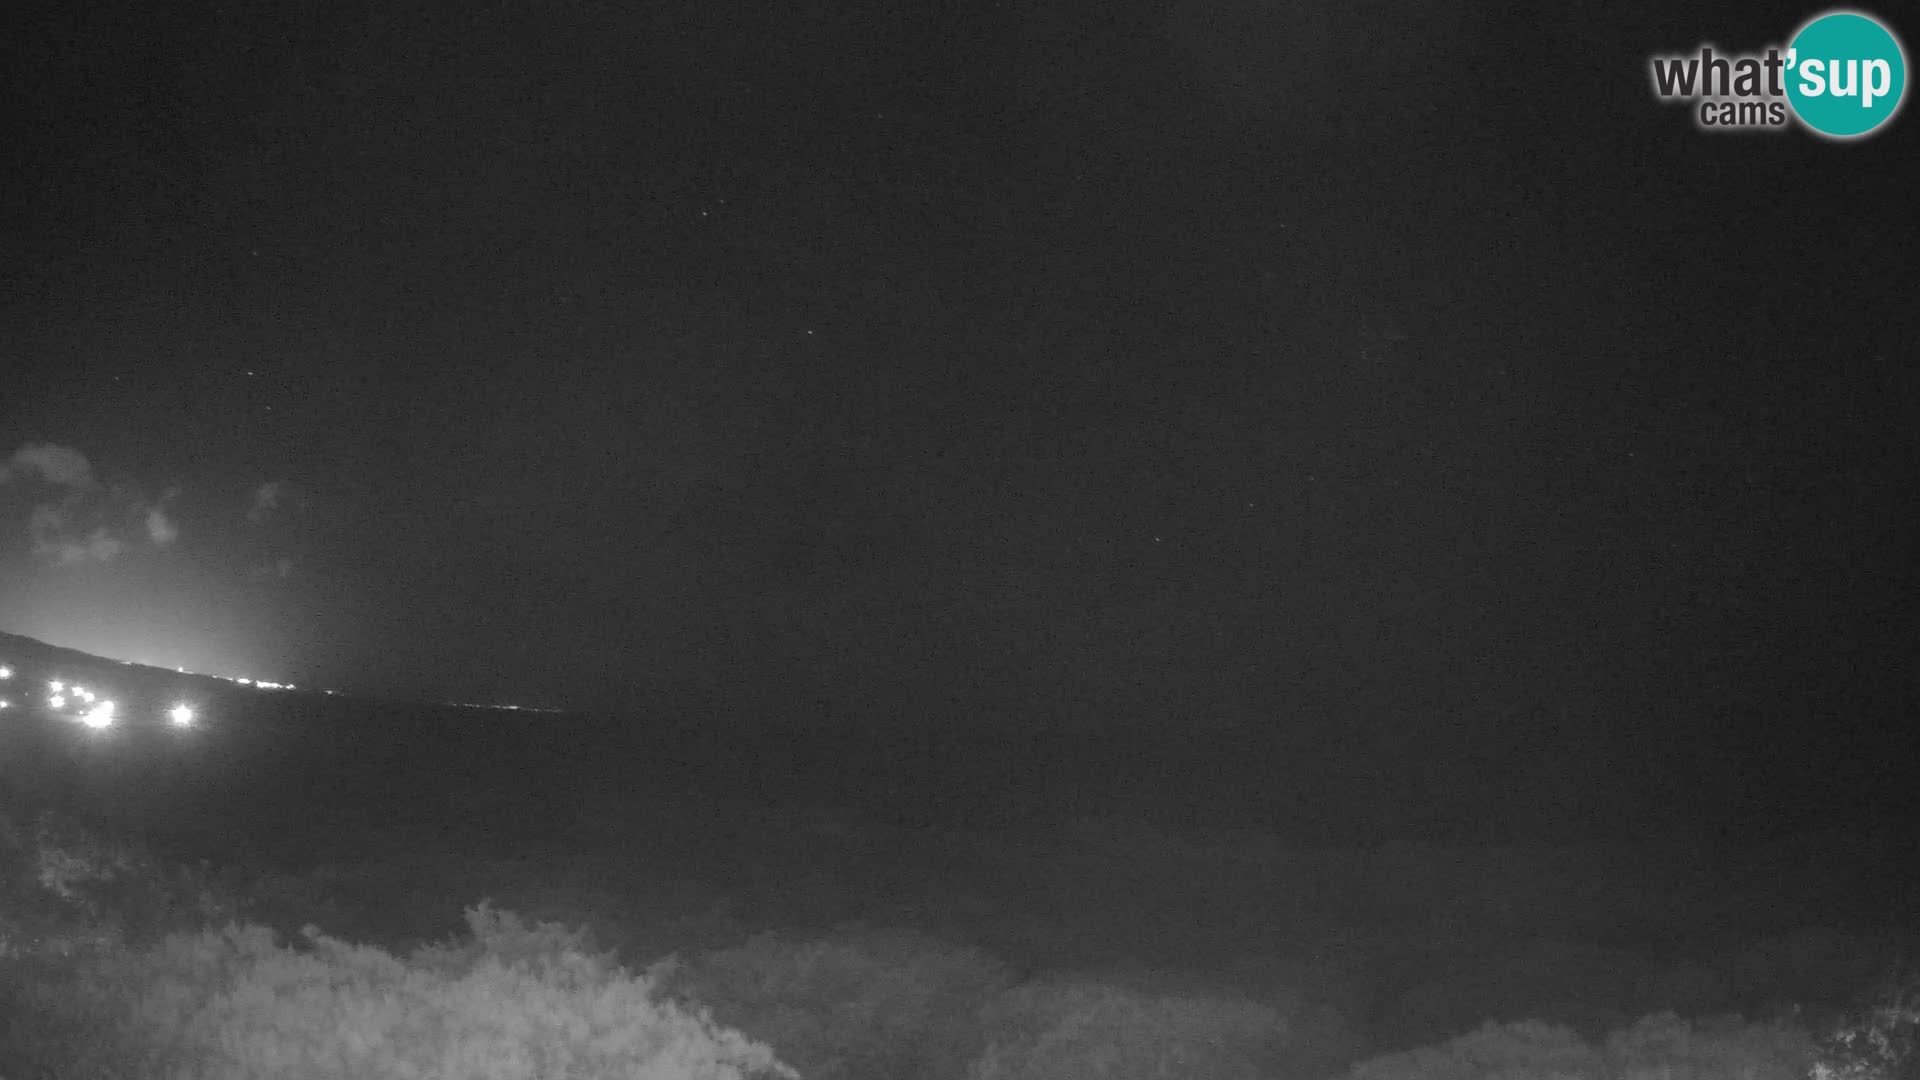 Villaplatamona, vista panoramica sul Golfo dell’Asinara, Platamona, Sorso, Sardegna – live webcam